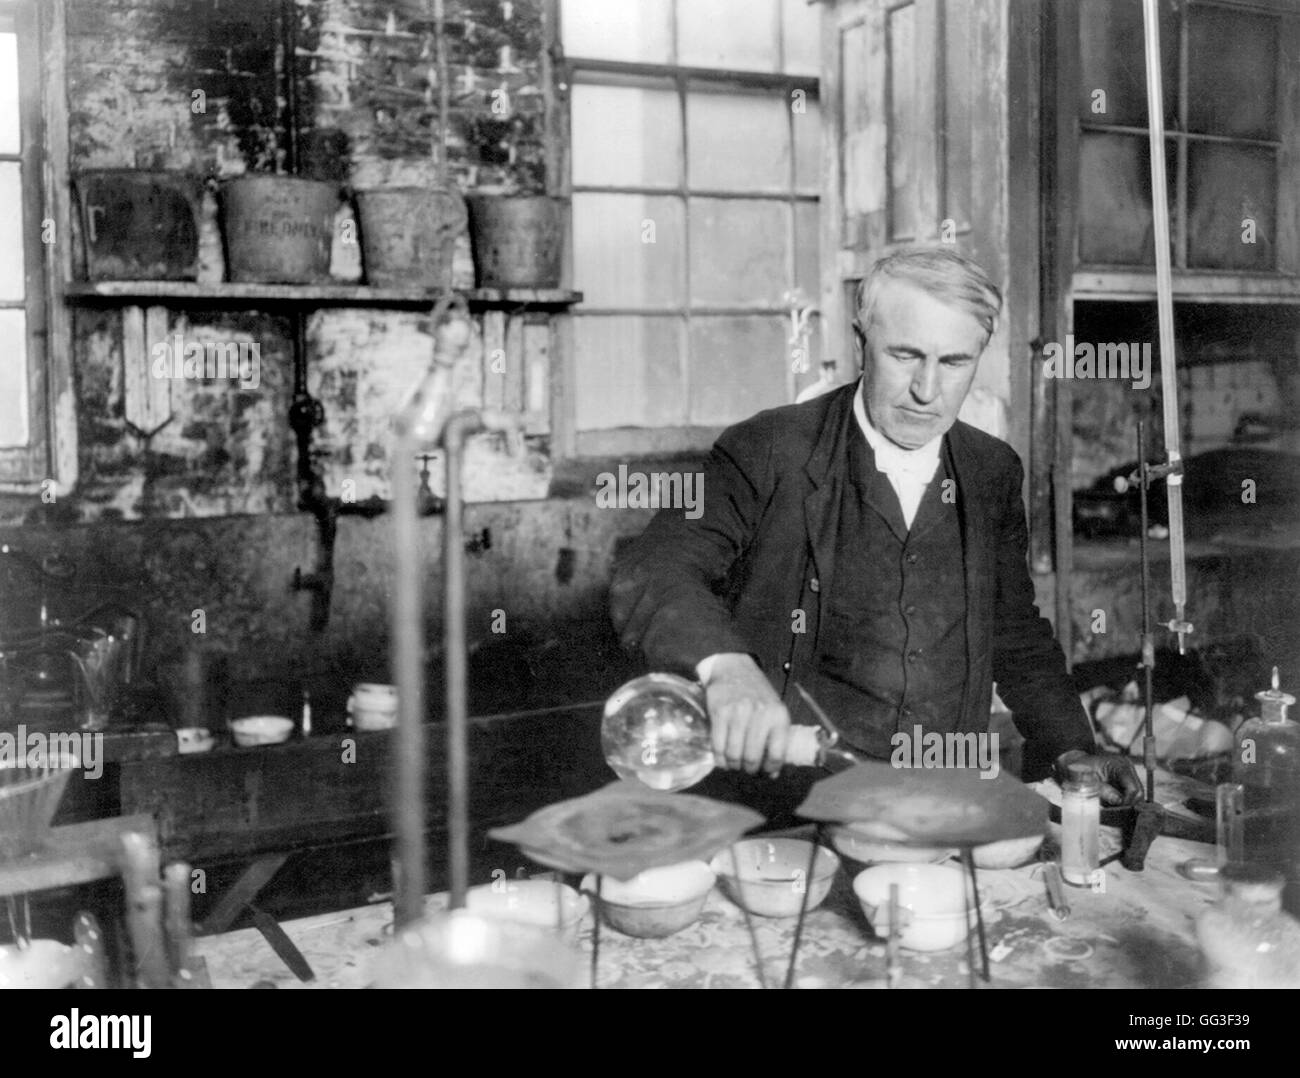 Thomas Edison. The American inventor and businessman,Thomas Edison (1847-1931), working in his chemistry laboratory. Portrait c.1905. Stock Photo